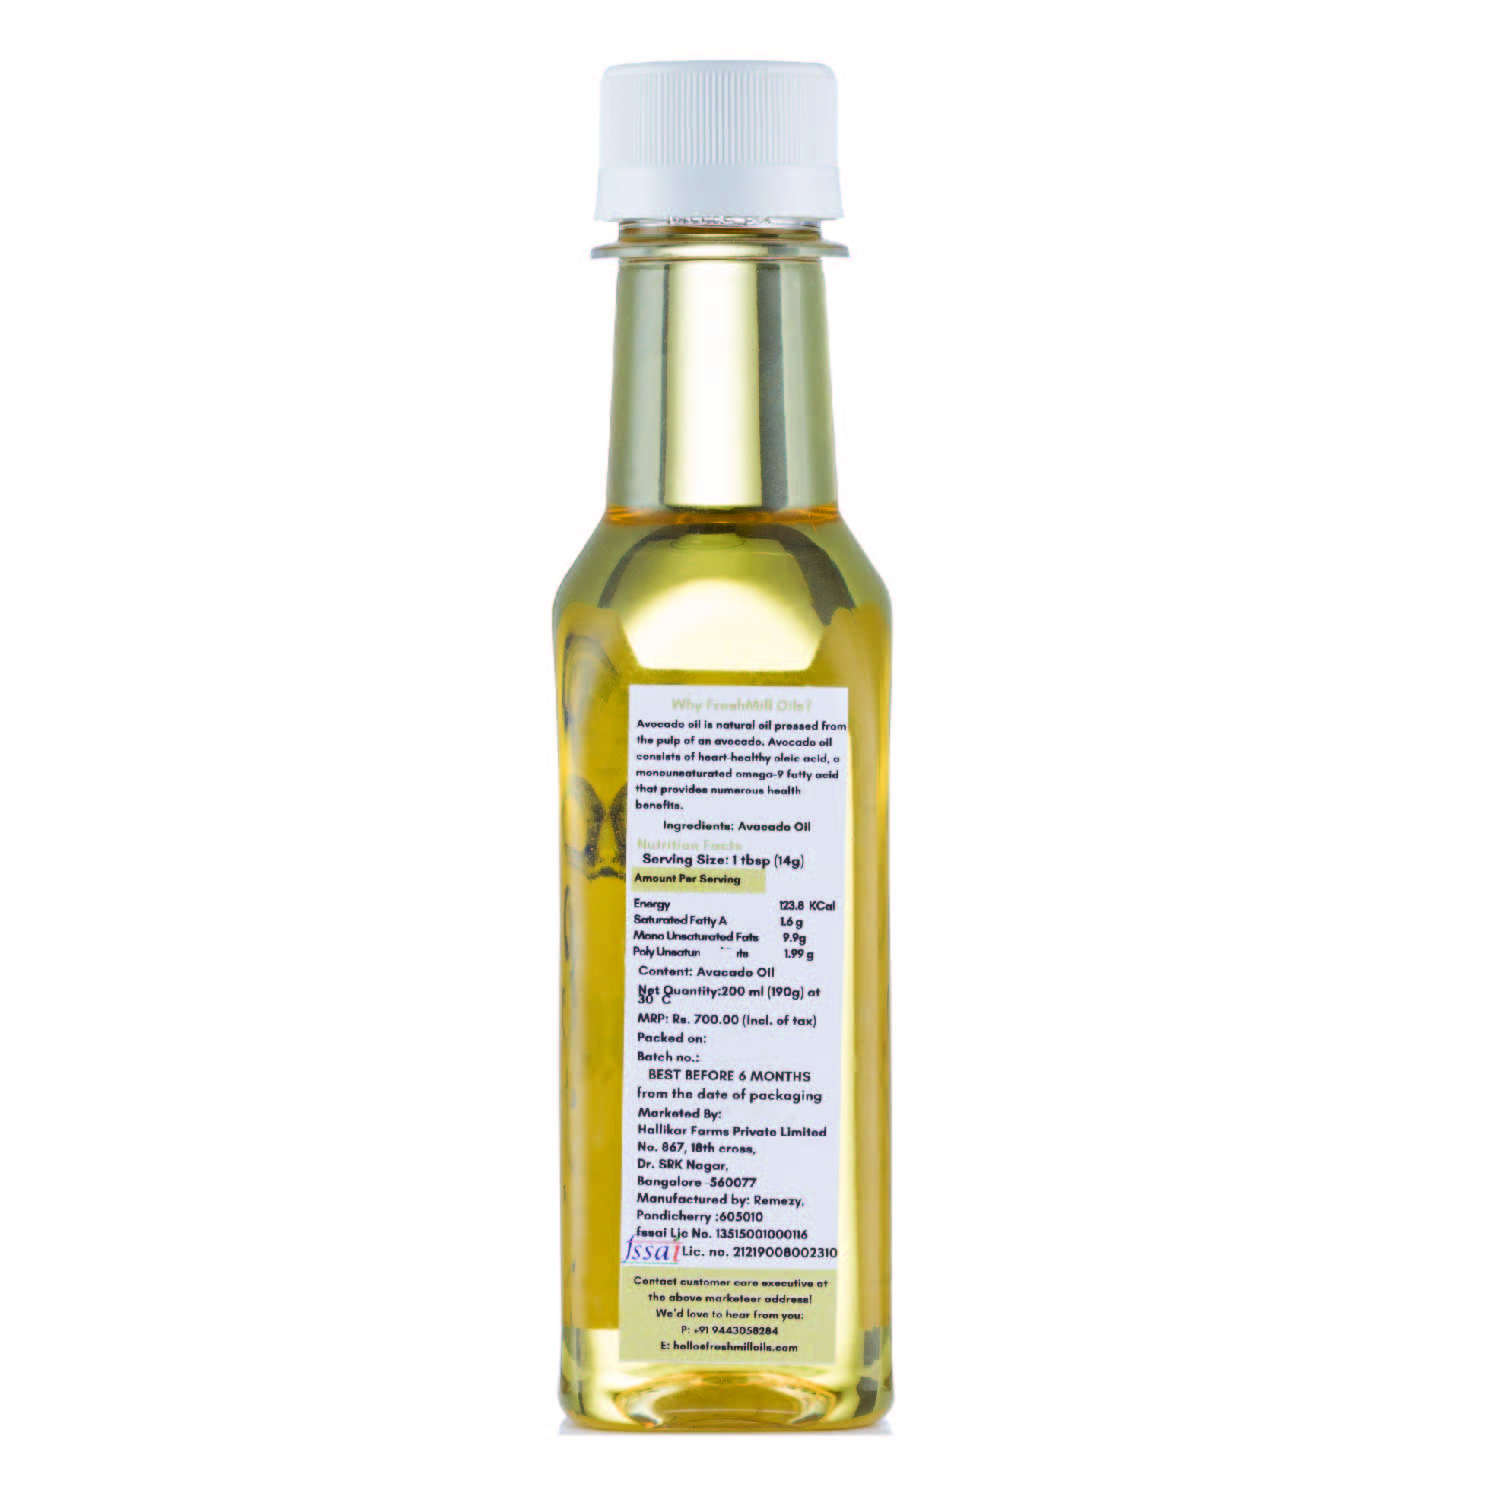 Product: Freshmill Avacado Oil